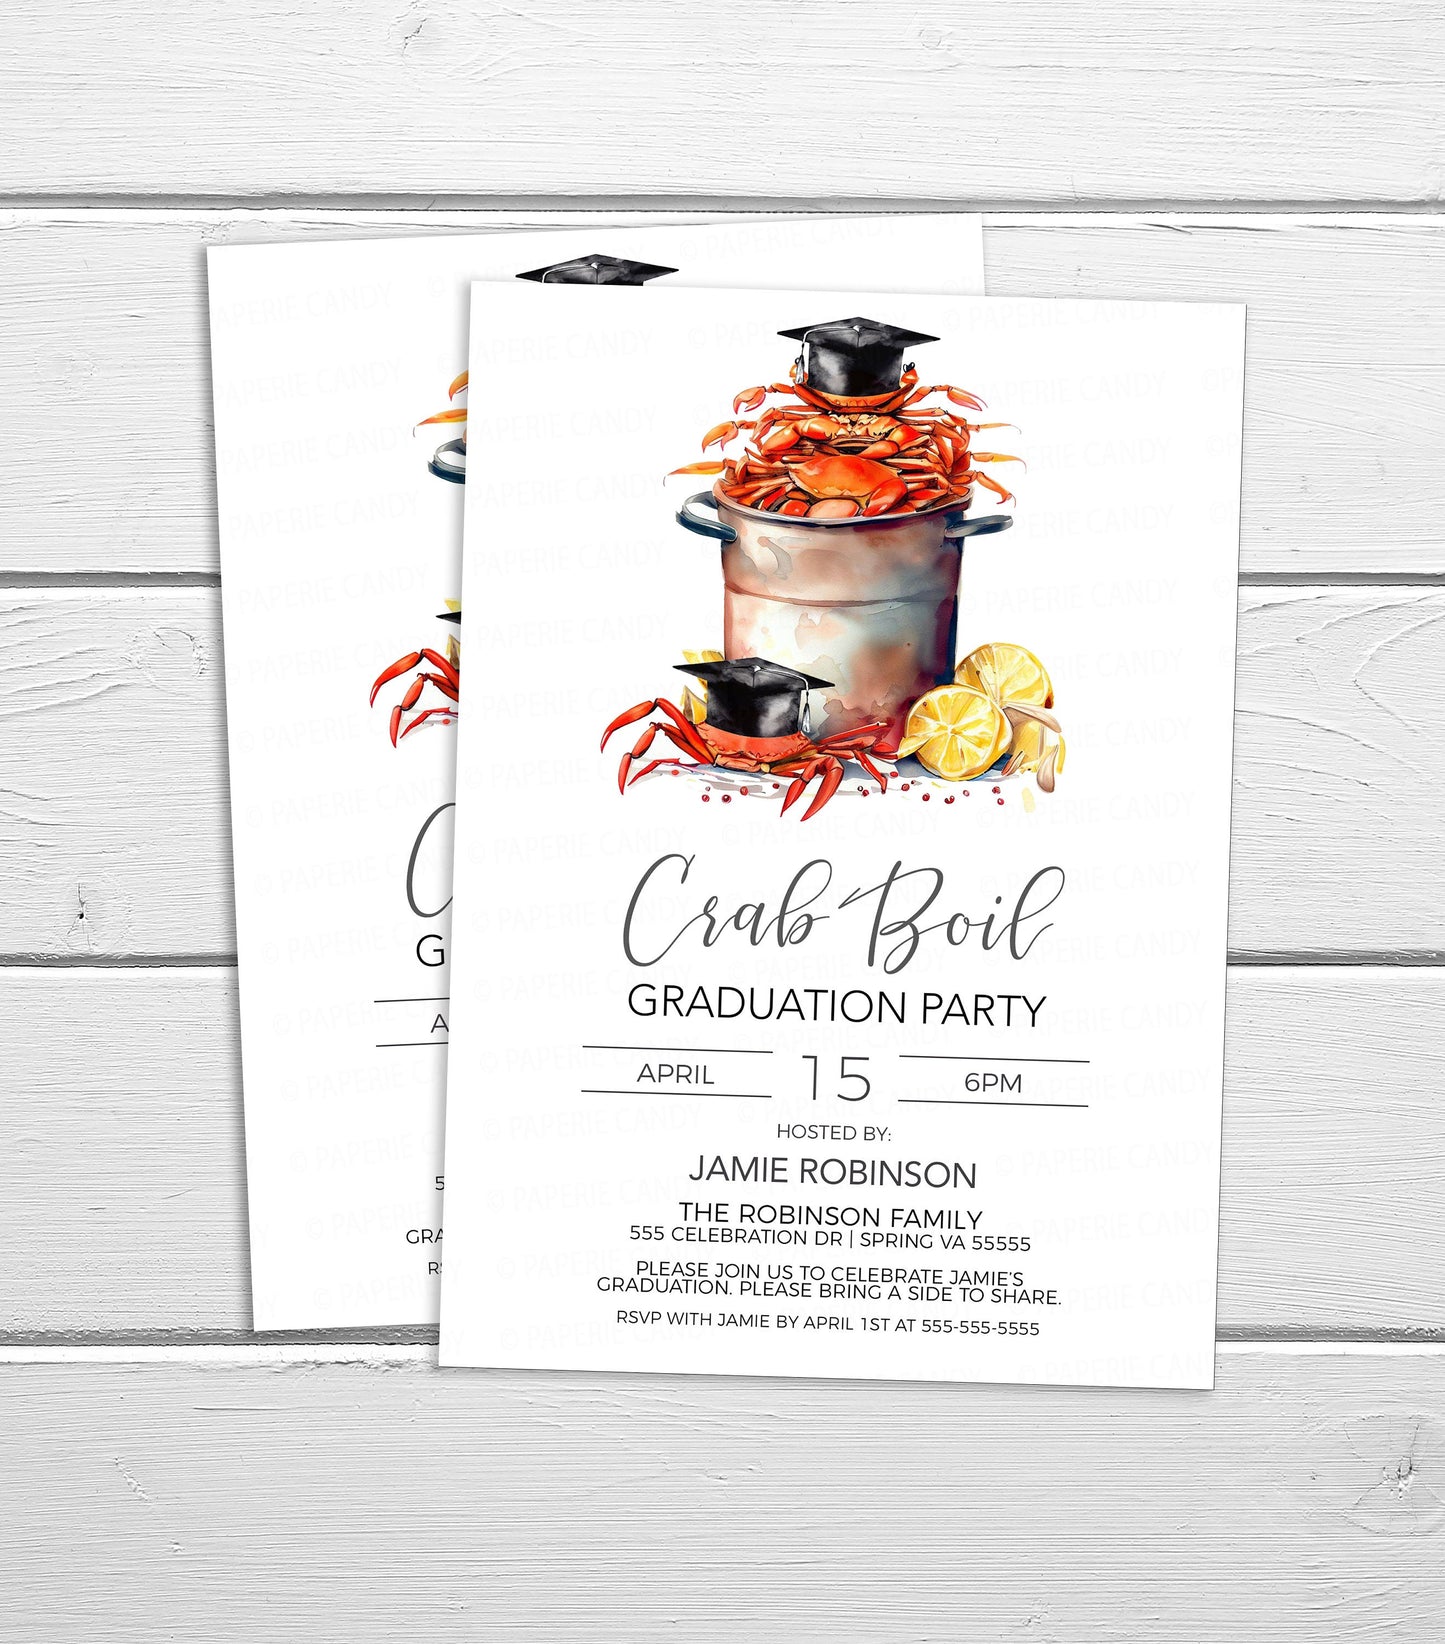 Crab Boil Graduation Invitation, Crab Boil Grad Invite, Crab Boil Graduation Party, High School Senior College, Editable Printable Template